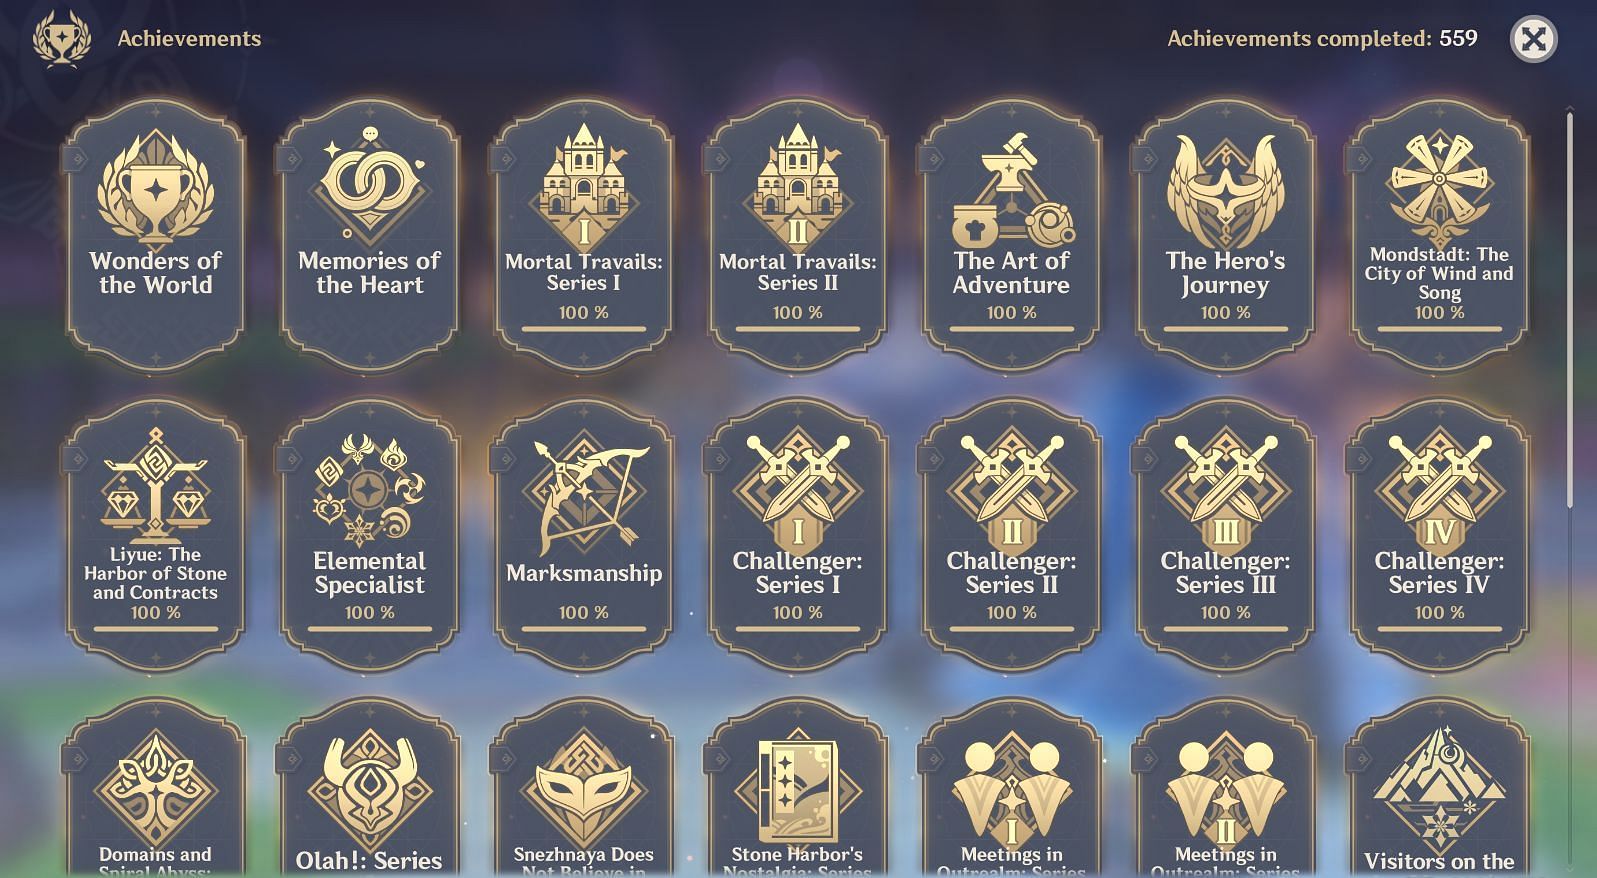 New achievements in 2.5 update (Image via Genshin Impact)